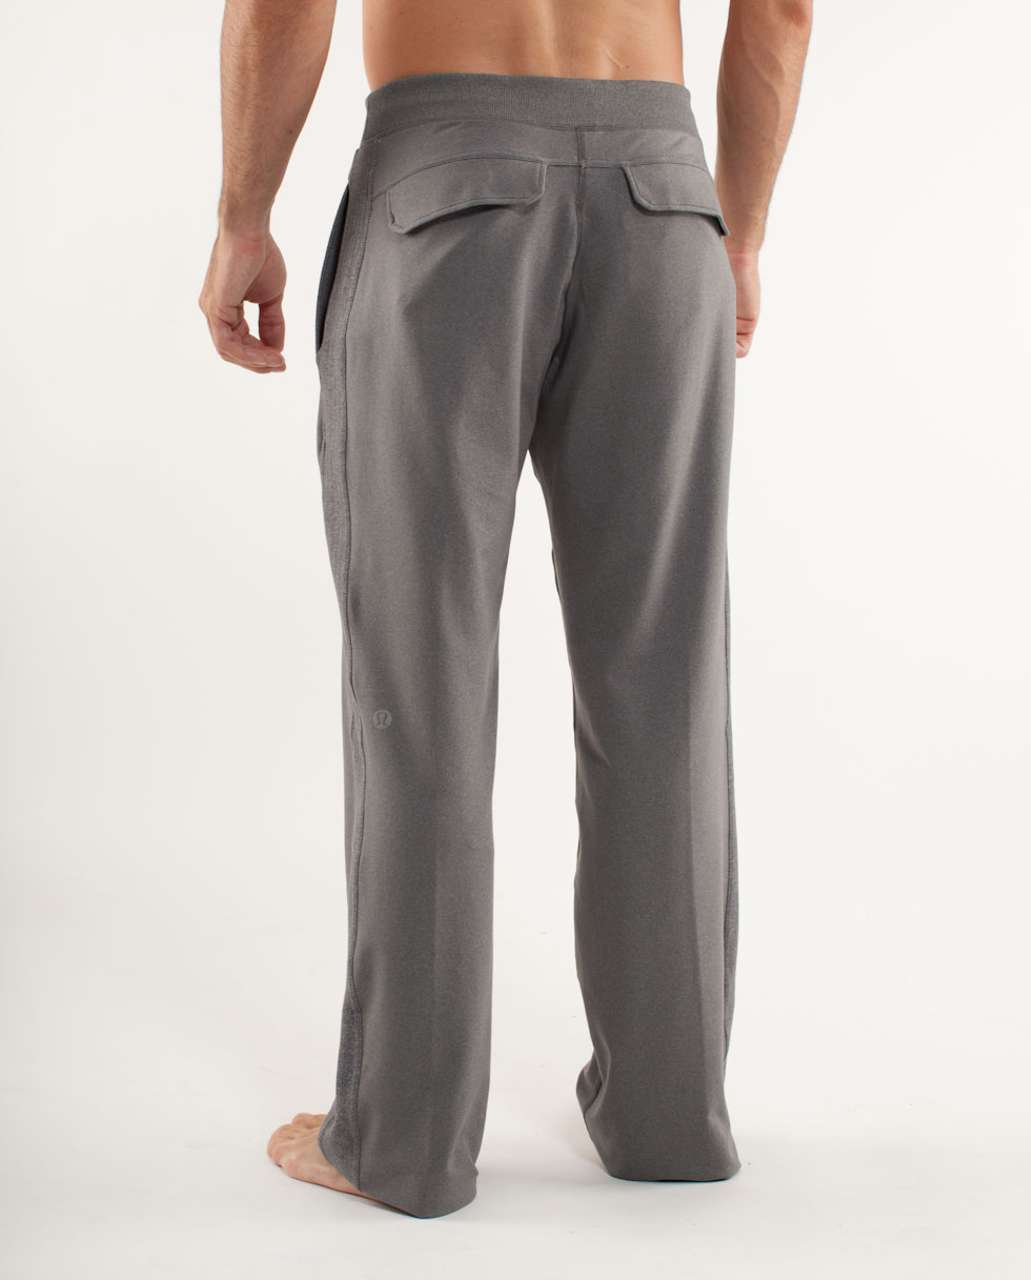 Lululemon Athletica Men's Kung Fu Pants Pull On Yoga sweatpants Gray XL